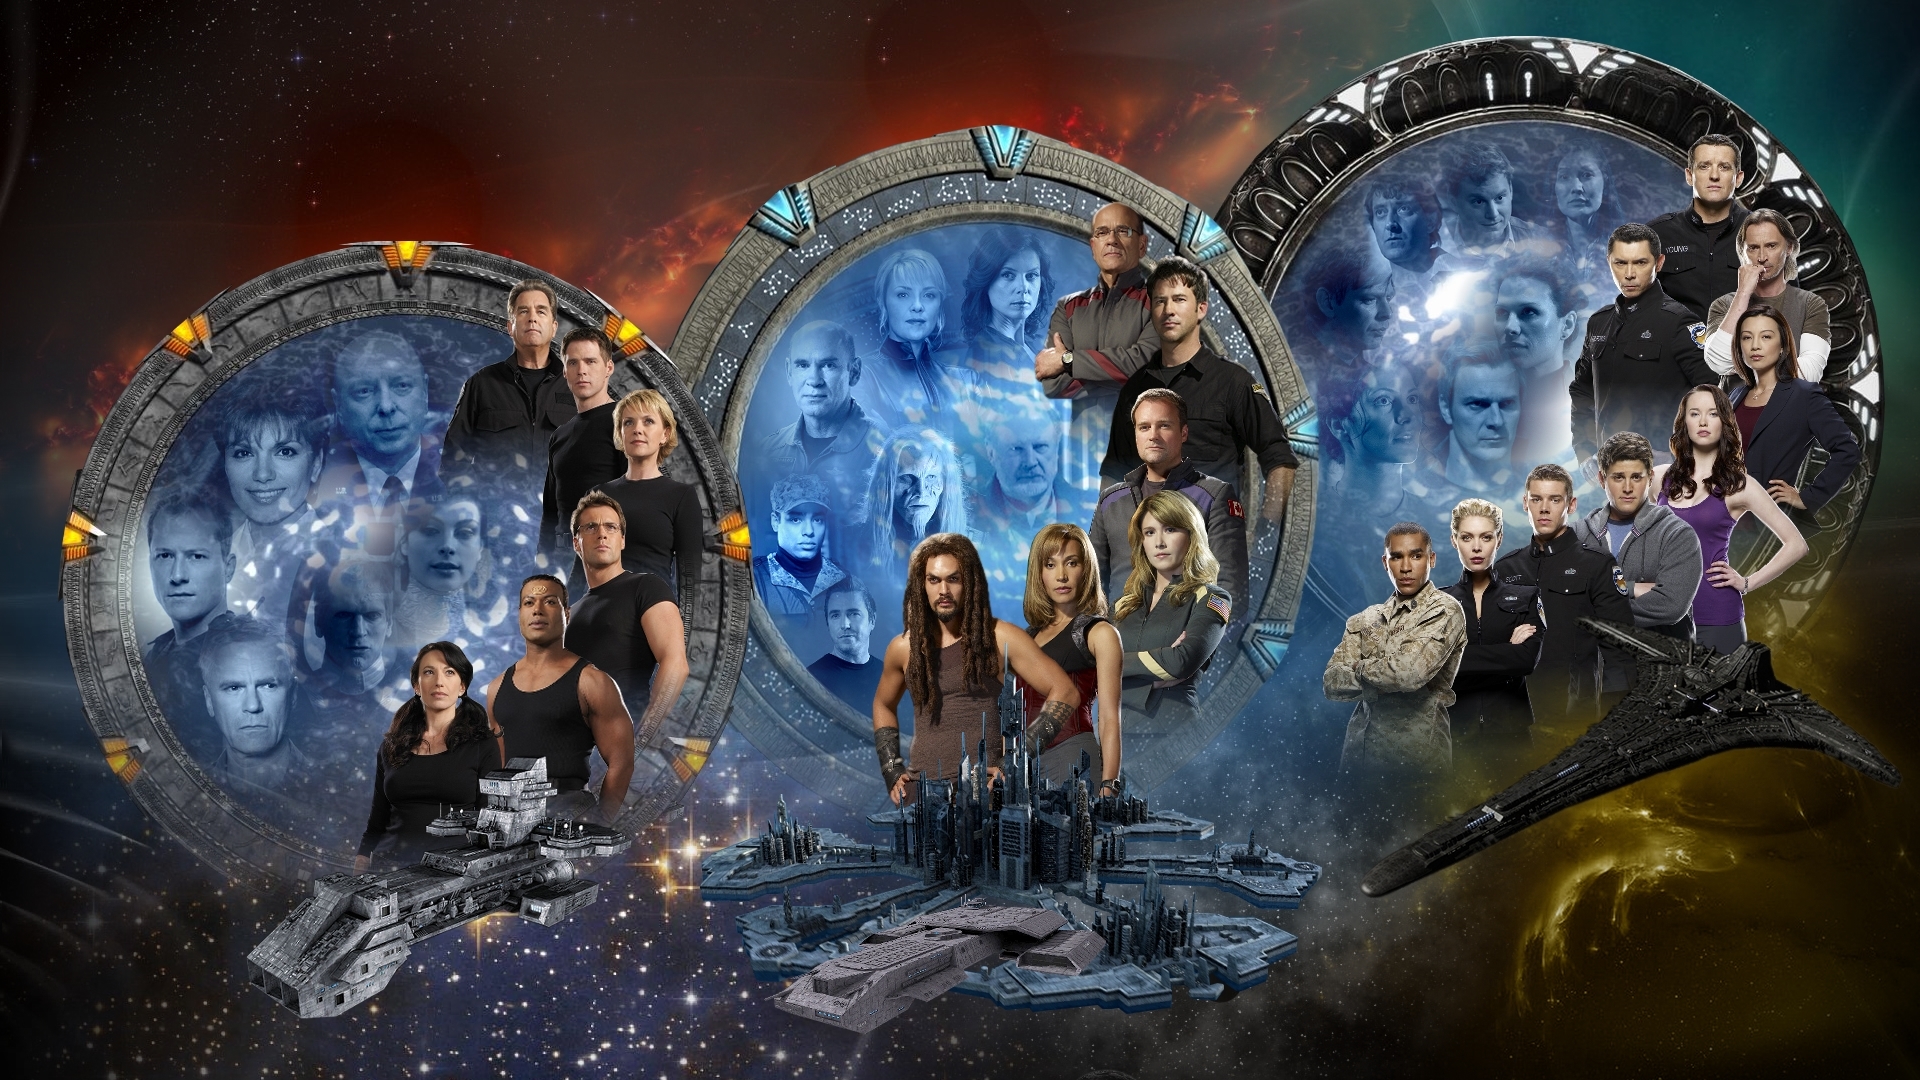 Stargate Atlantis Wallpapers